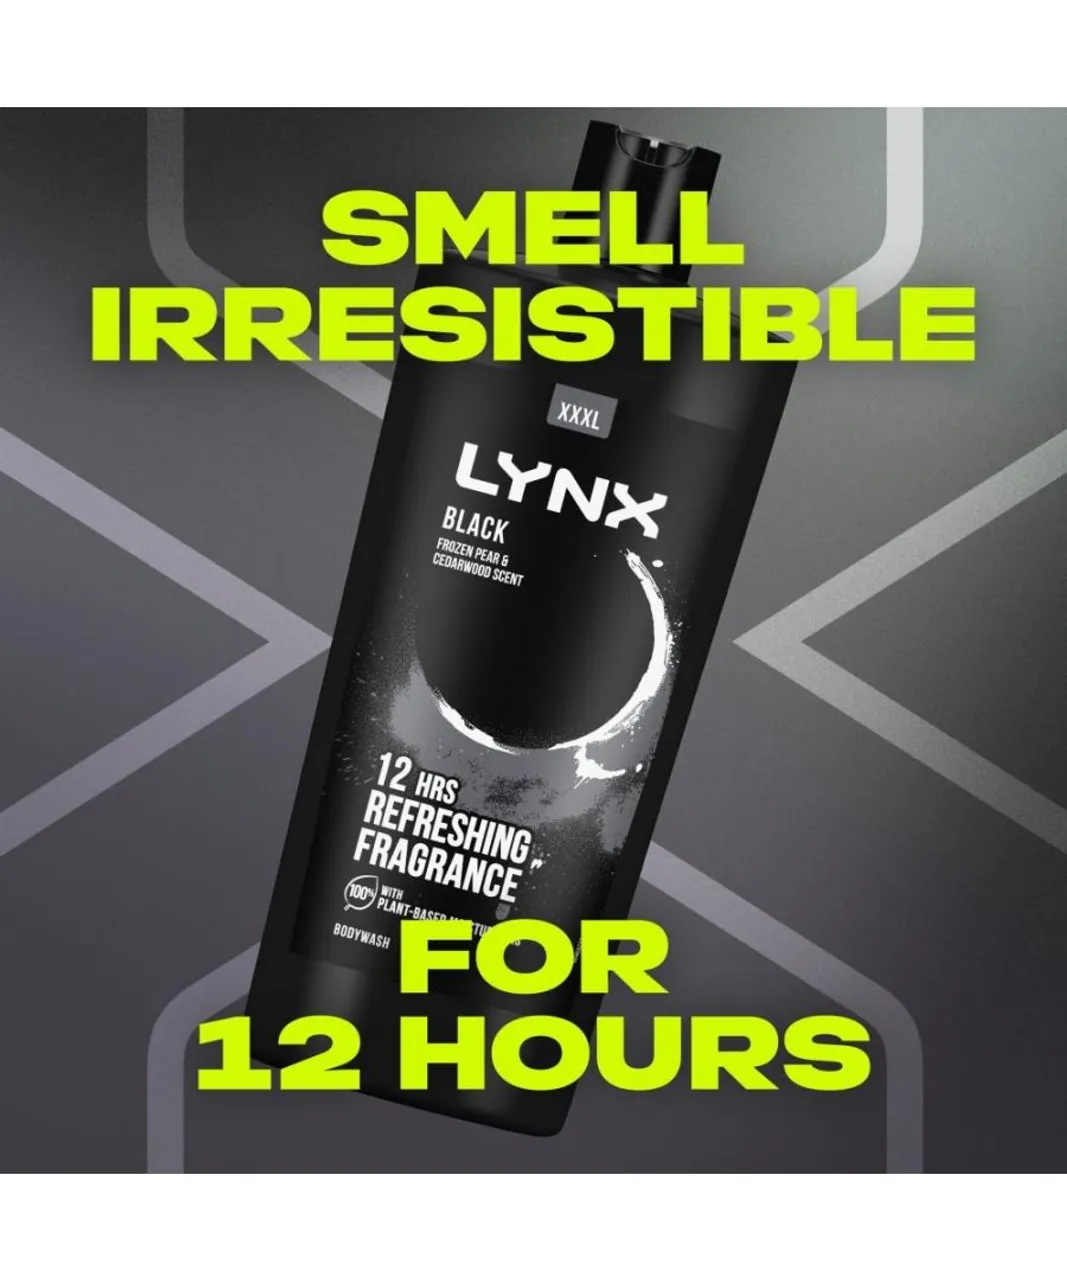 Lynx Mens Black Shower Gel with Frozen Pear & Cedarwood HD Fragrance, 700ml - One Size